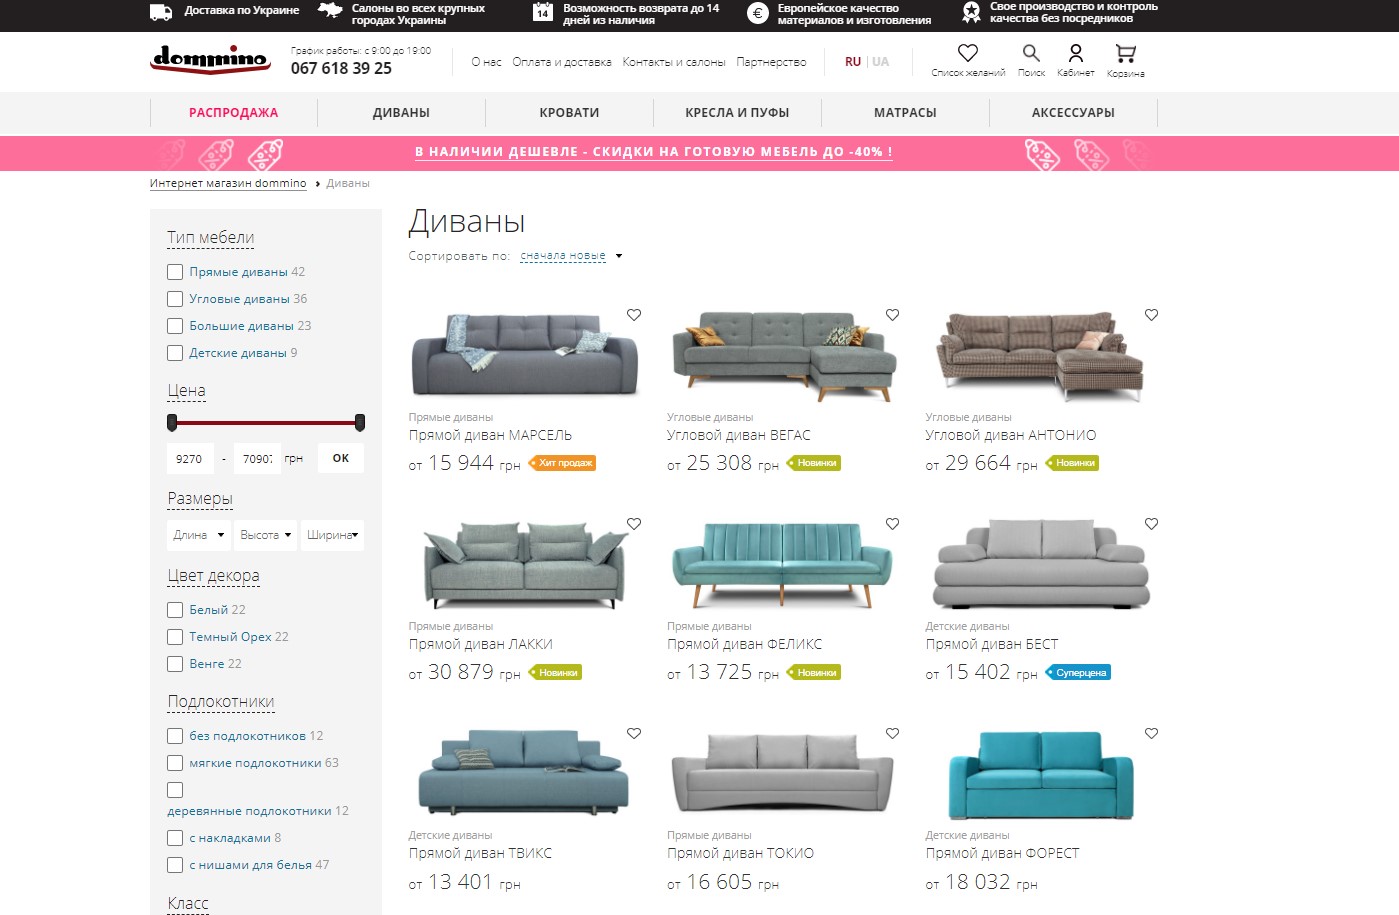 Online store developed by Dommino website